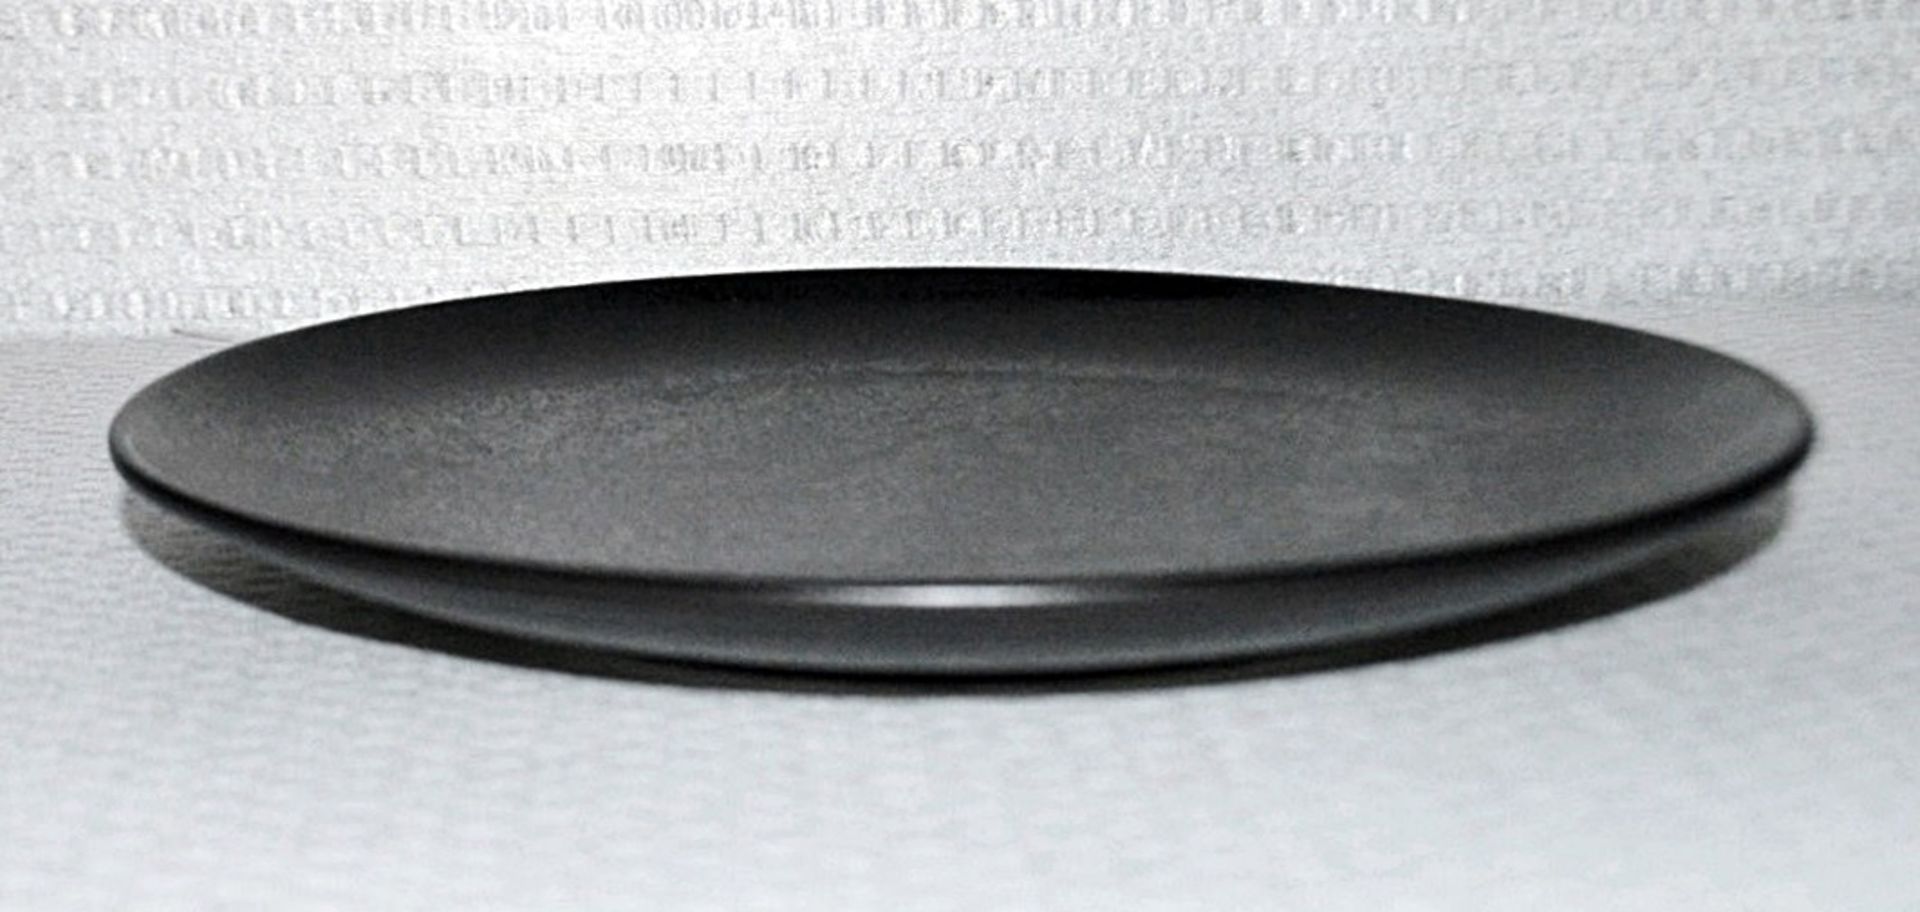 30 x RAK Porcelain 'Karbon' Black Round Flat Porcelain Plates - 26.5cm In Diameter - Image 3 of 5